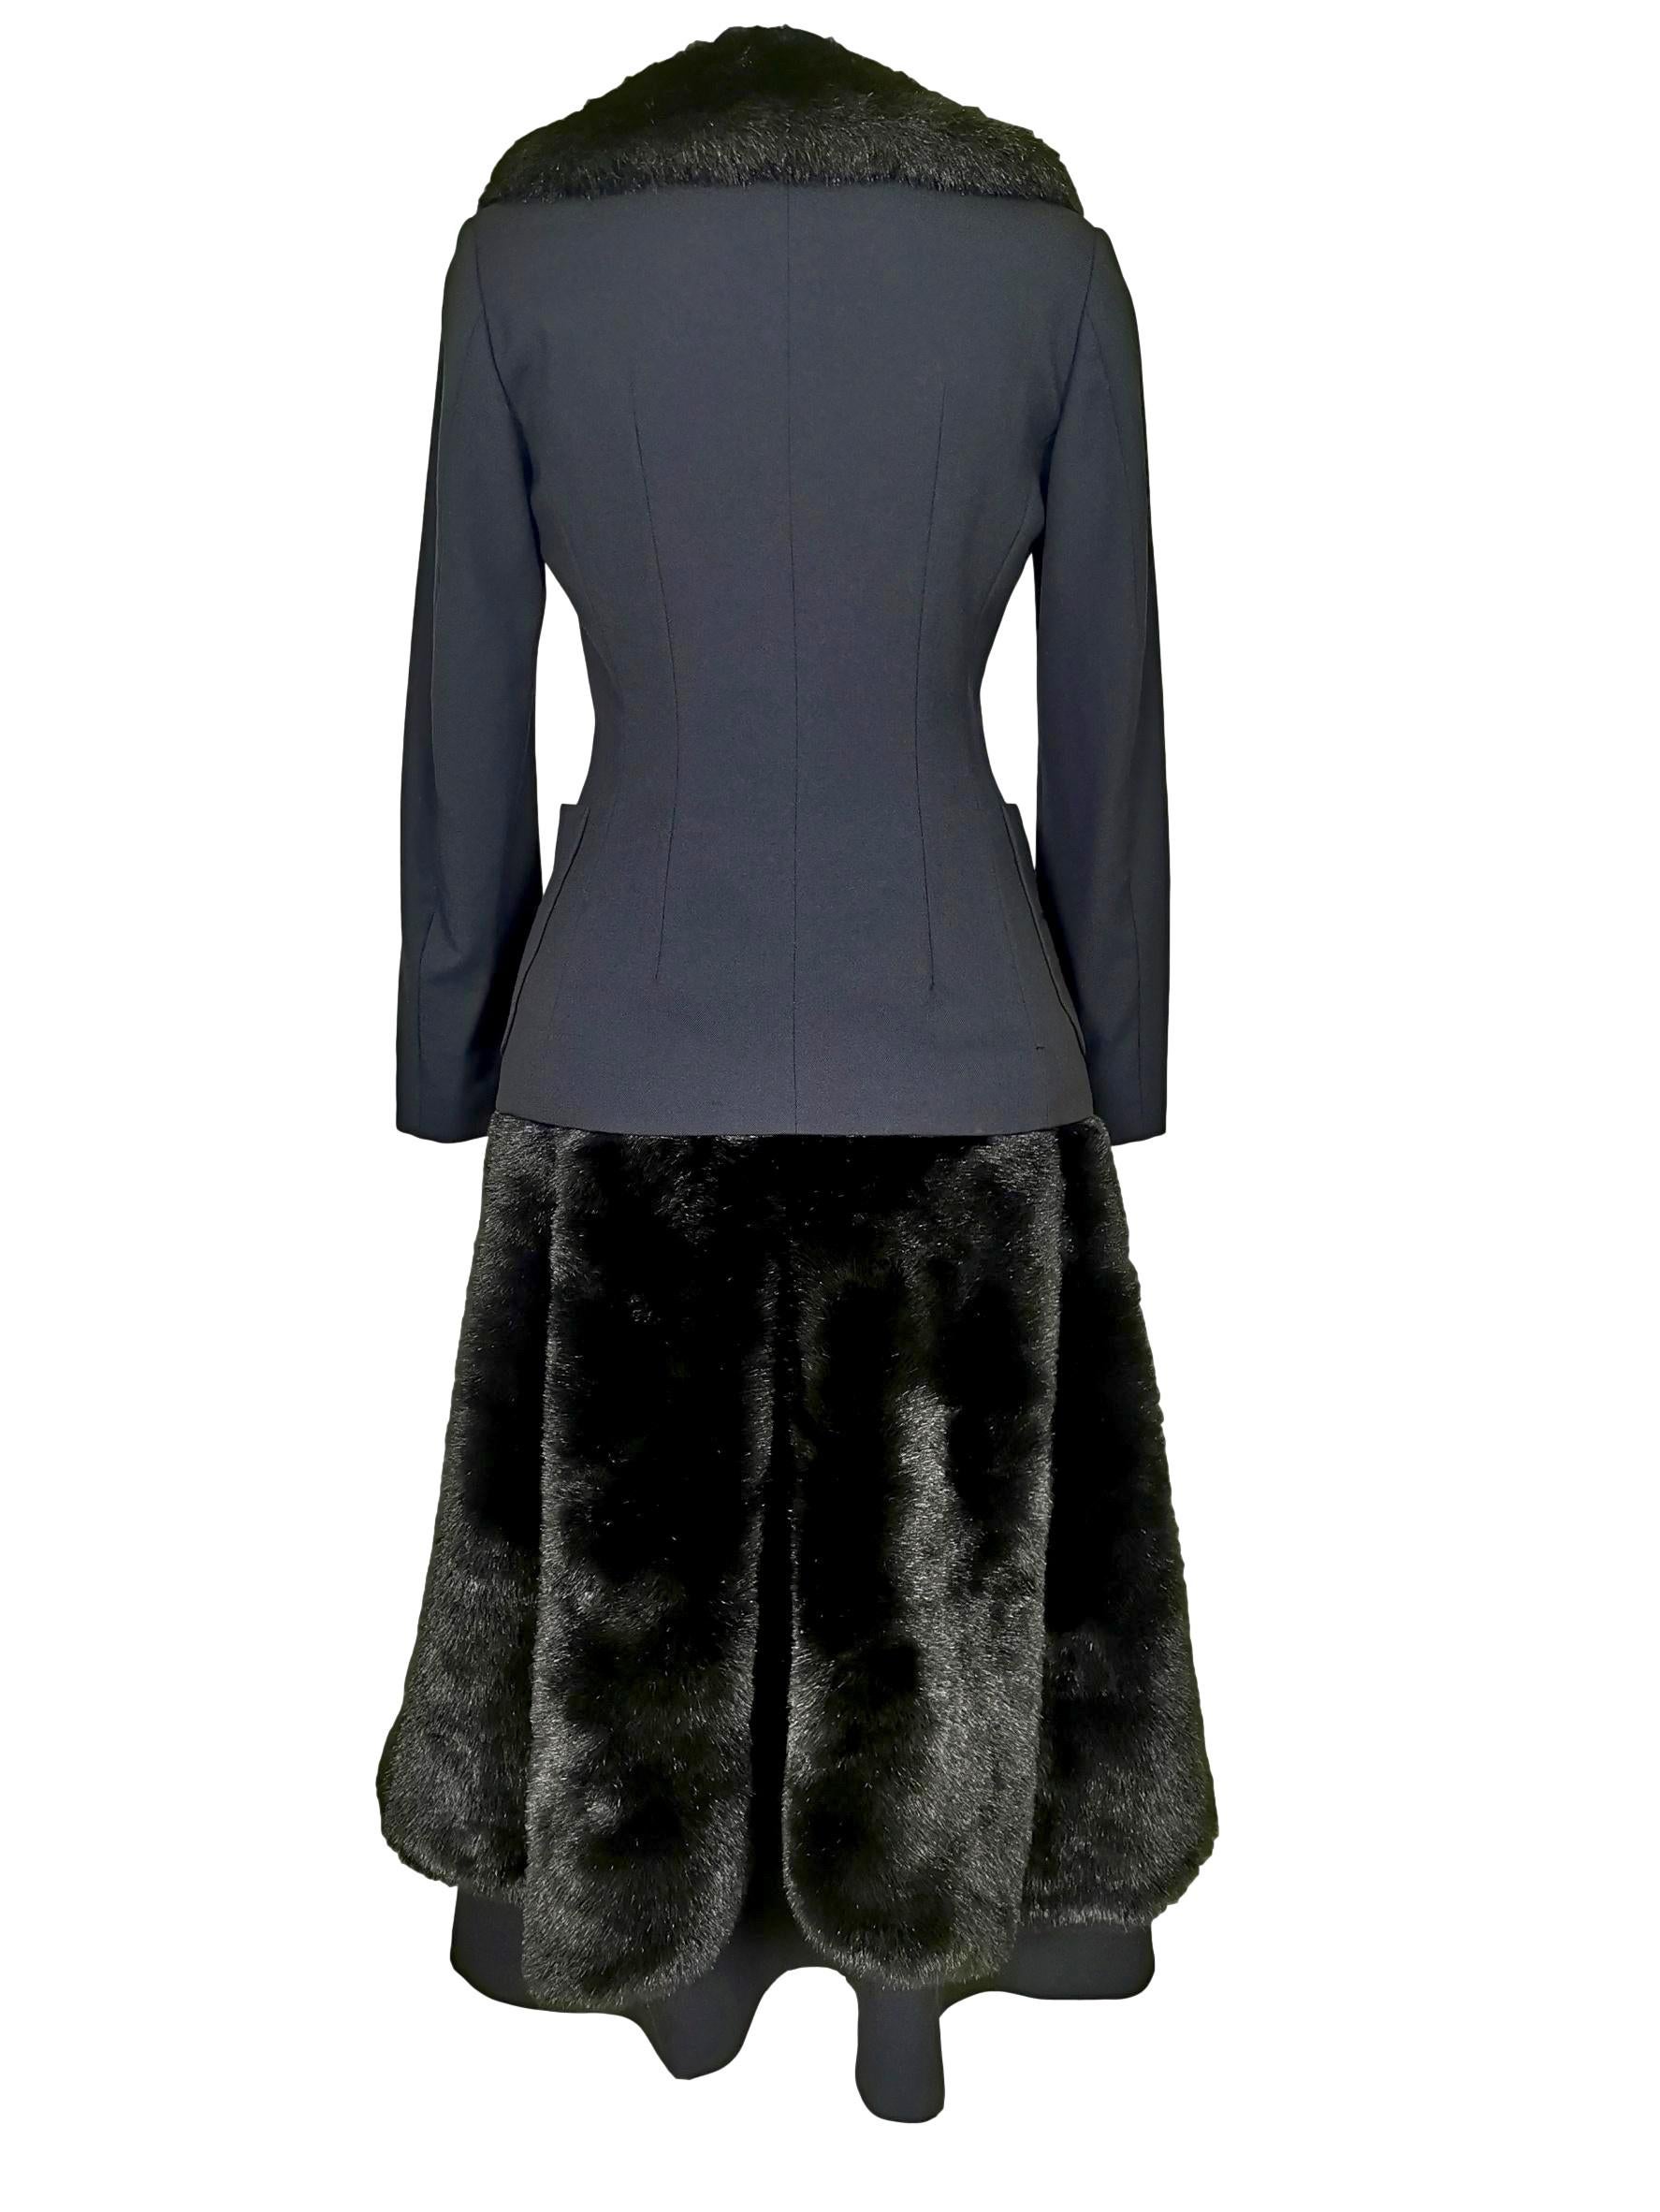 Comme des Garcons Junya Watanabe
AD 1997
50s Inspired Skirt Suit
Detachable Faux Fur Collar
Size M